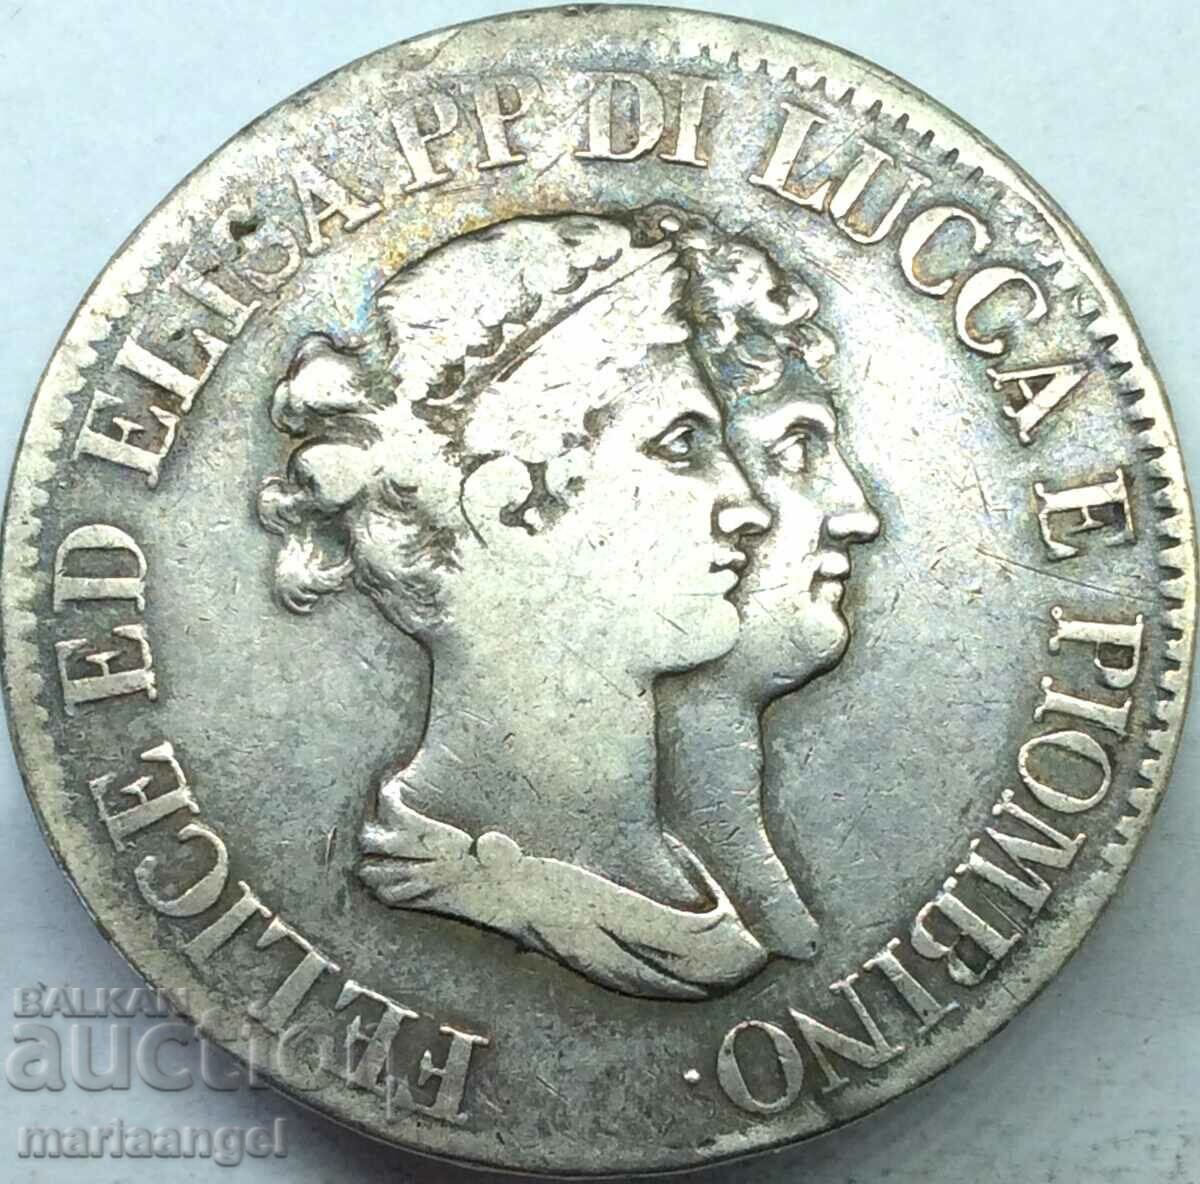 Italia 5 franci 1807 Luca Elisa Bonaparte și Felice